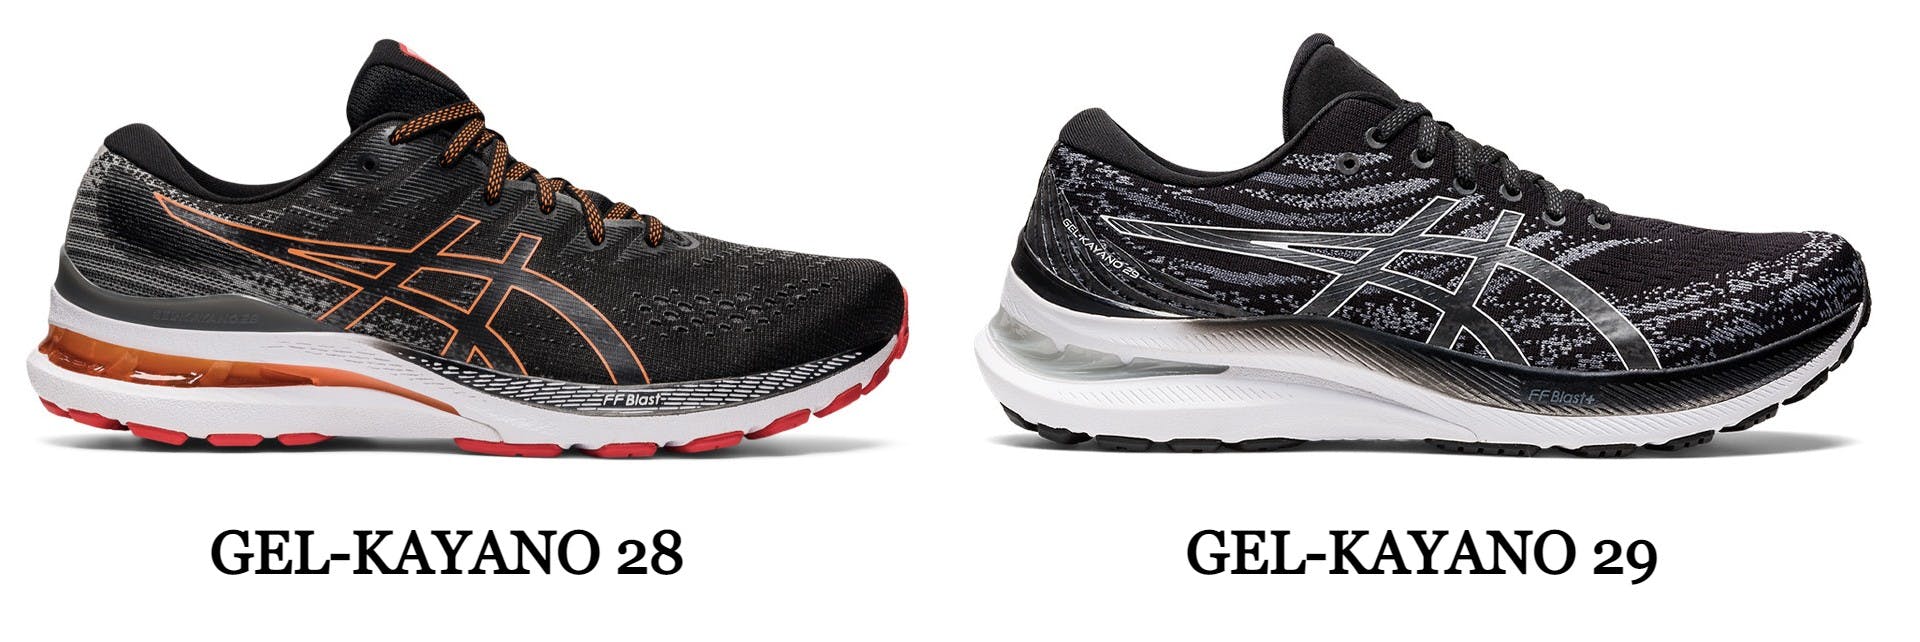 REVIEW: ASICS GEL-KAYANO 29 Road Running Shoes | The Running Hub |  